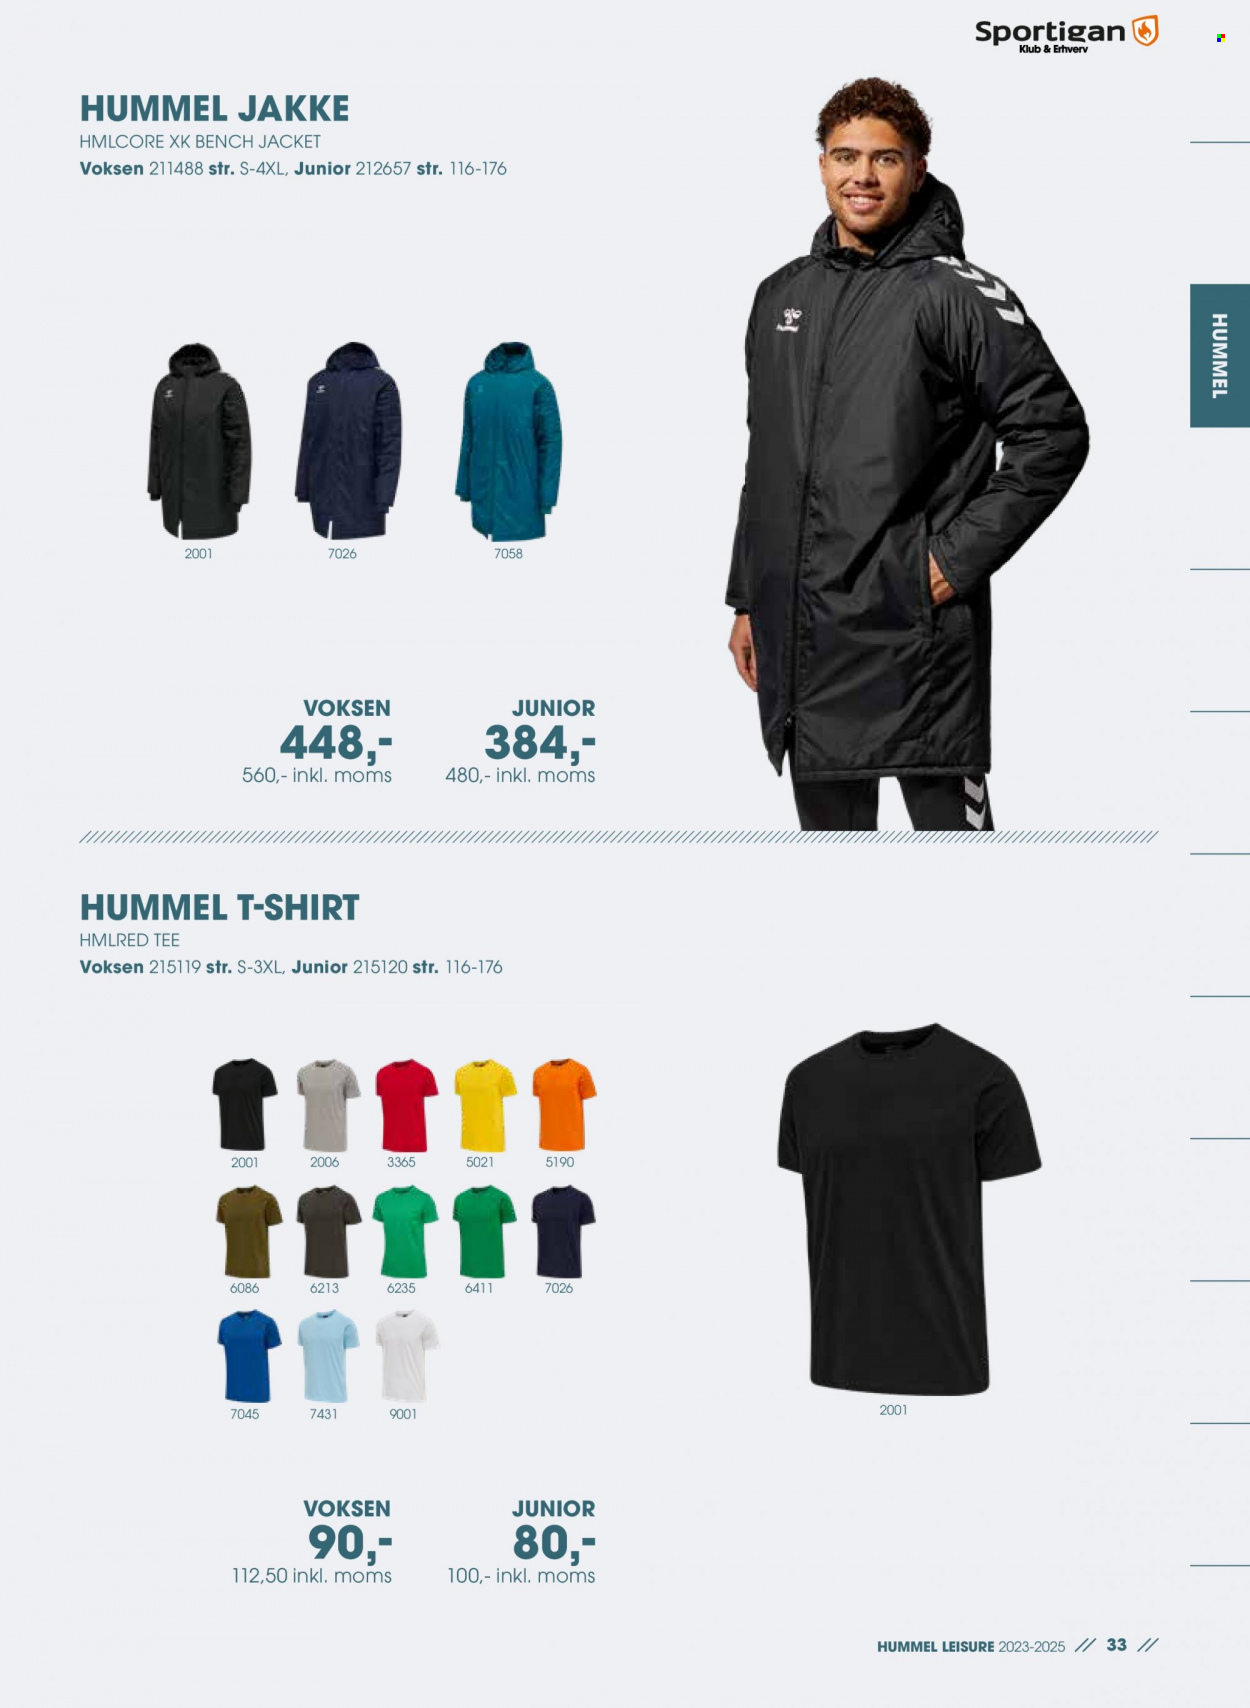 thumbnail - Sportigan tilbud  - tilbudsprodukter - Hummel, jakke, T-shirt. Side 33.